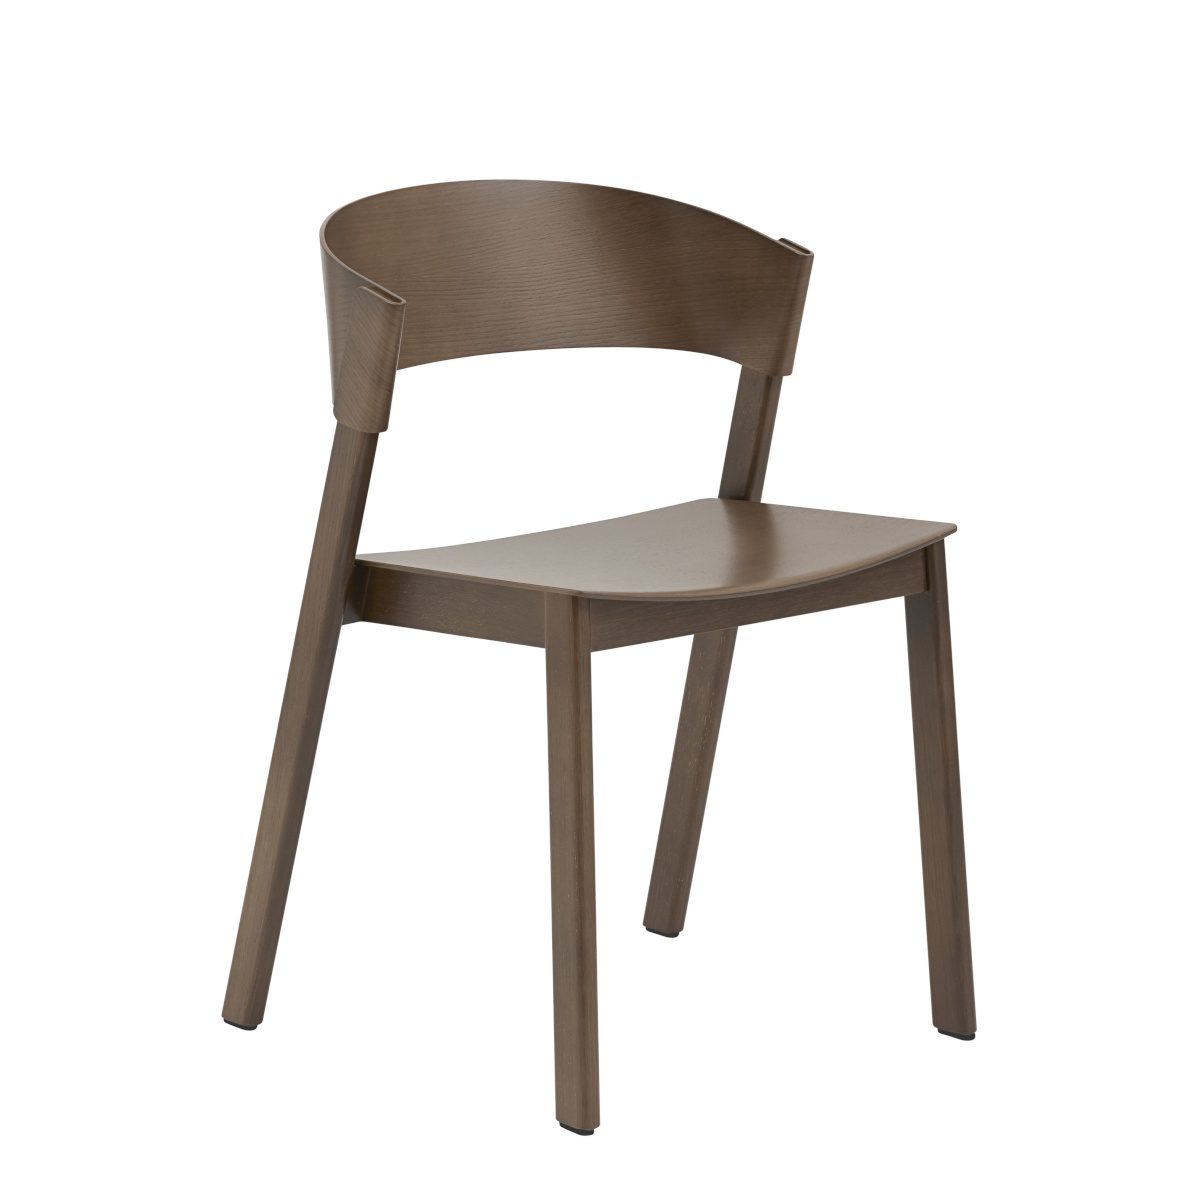 Cover Stuhl, schwarz